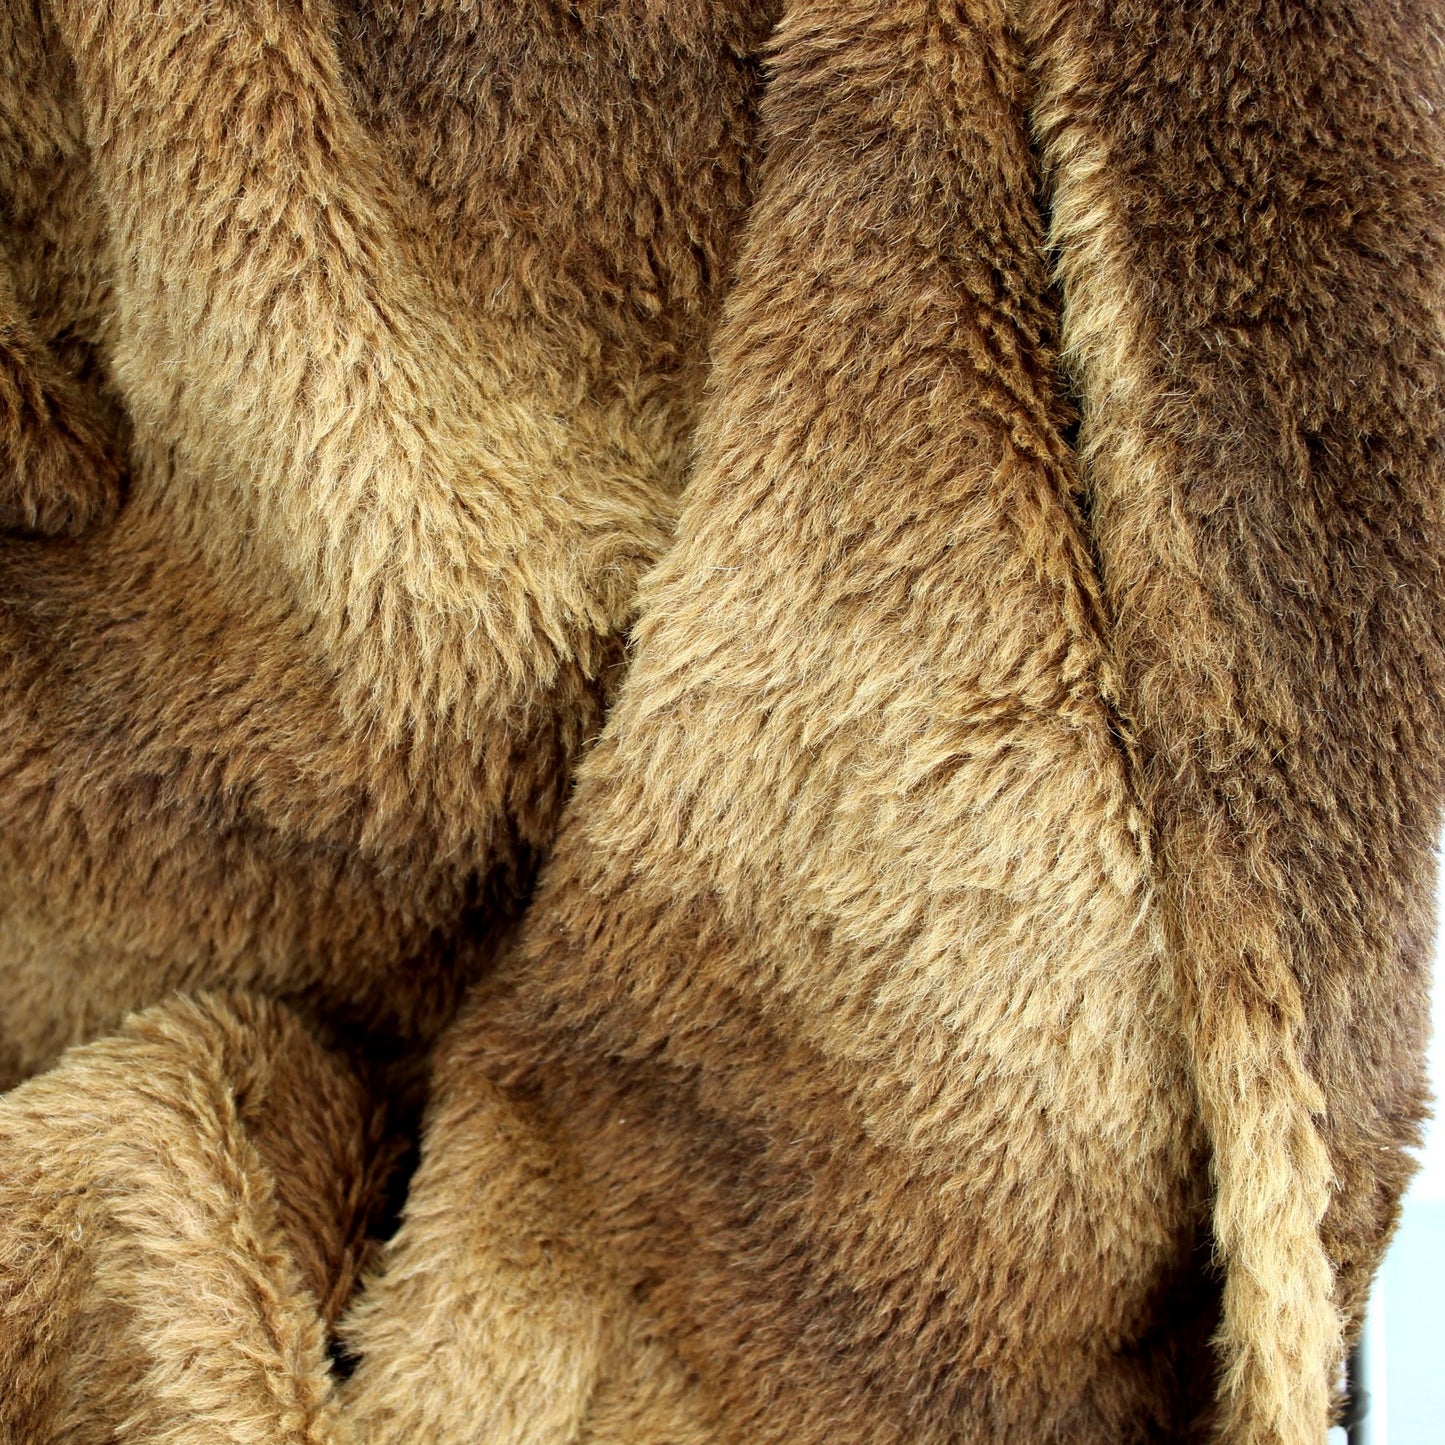 Antique Alpaca Wool Blanket Abercrombie Fitch Handsome Shades Brown closeup fur nap